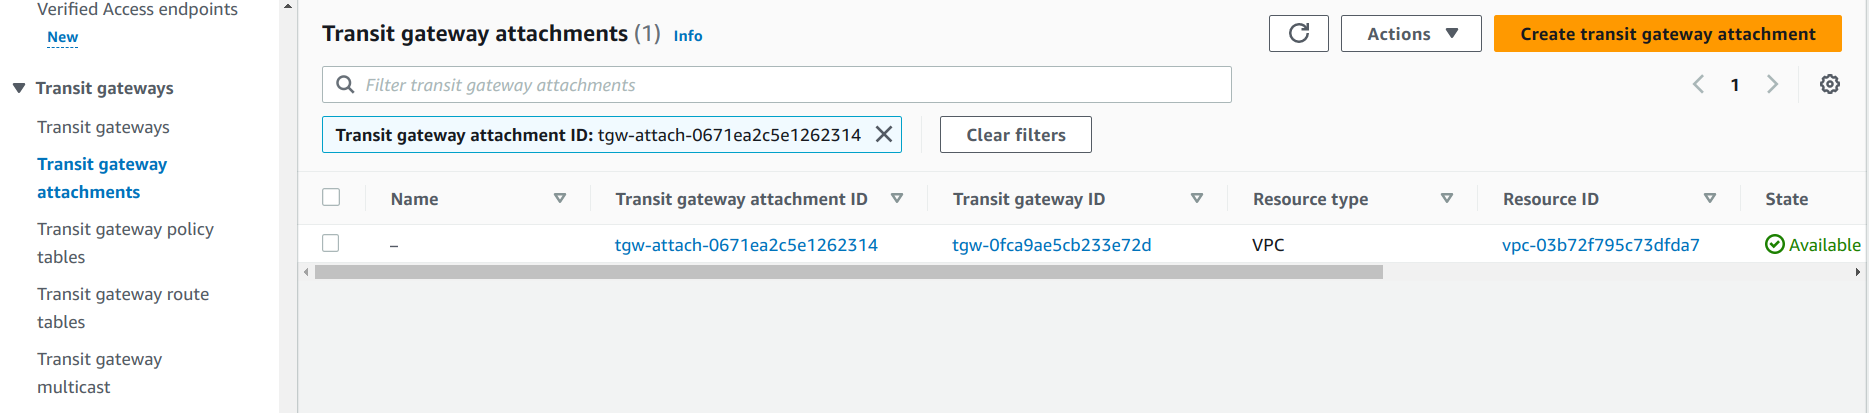 Transit gateway attachment status